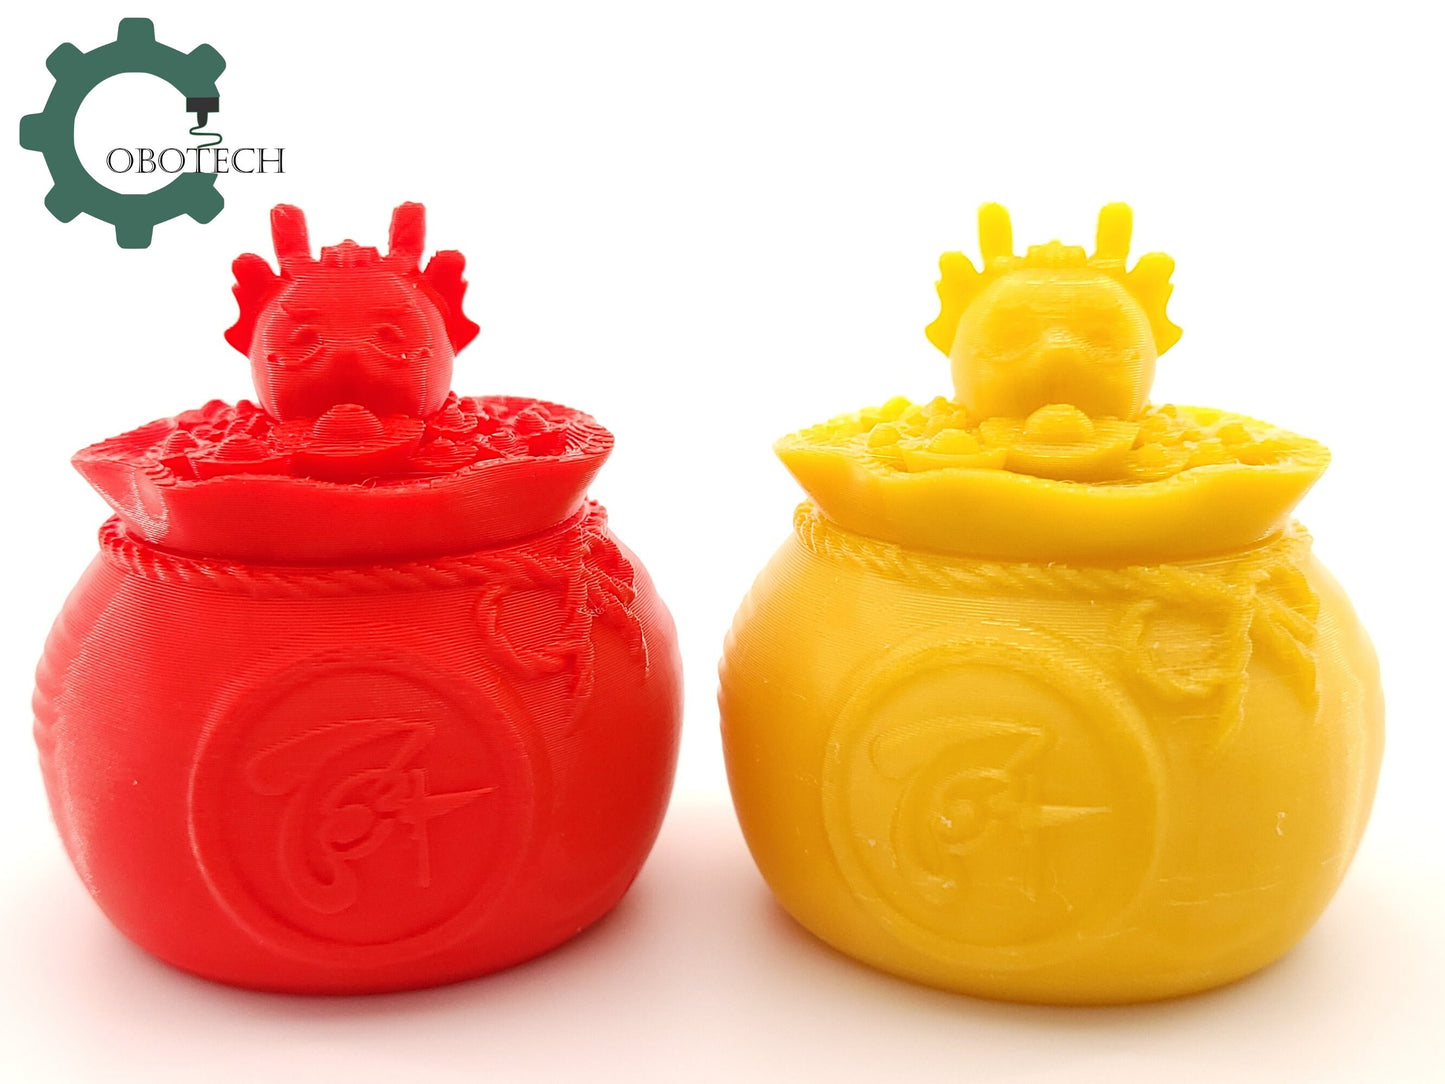 3D Print Lucky Dragon Money Jar by Cobotech, Articulated Dragon, Desk/Home Decor, Cool Gift